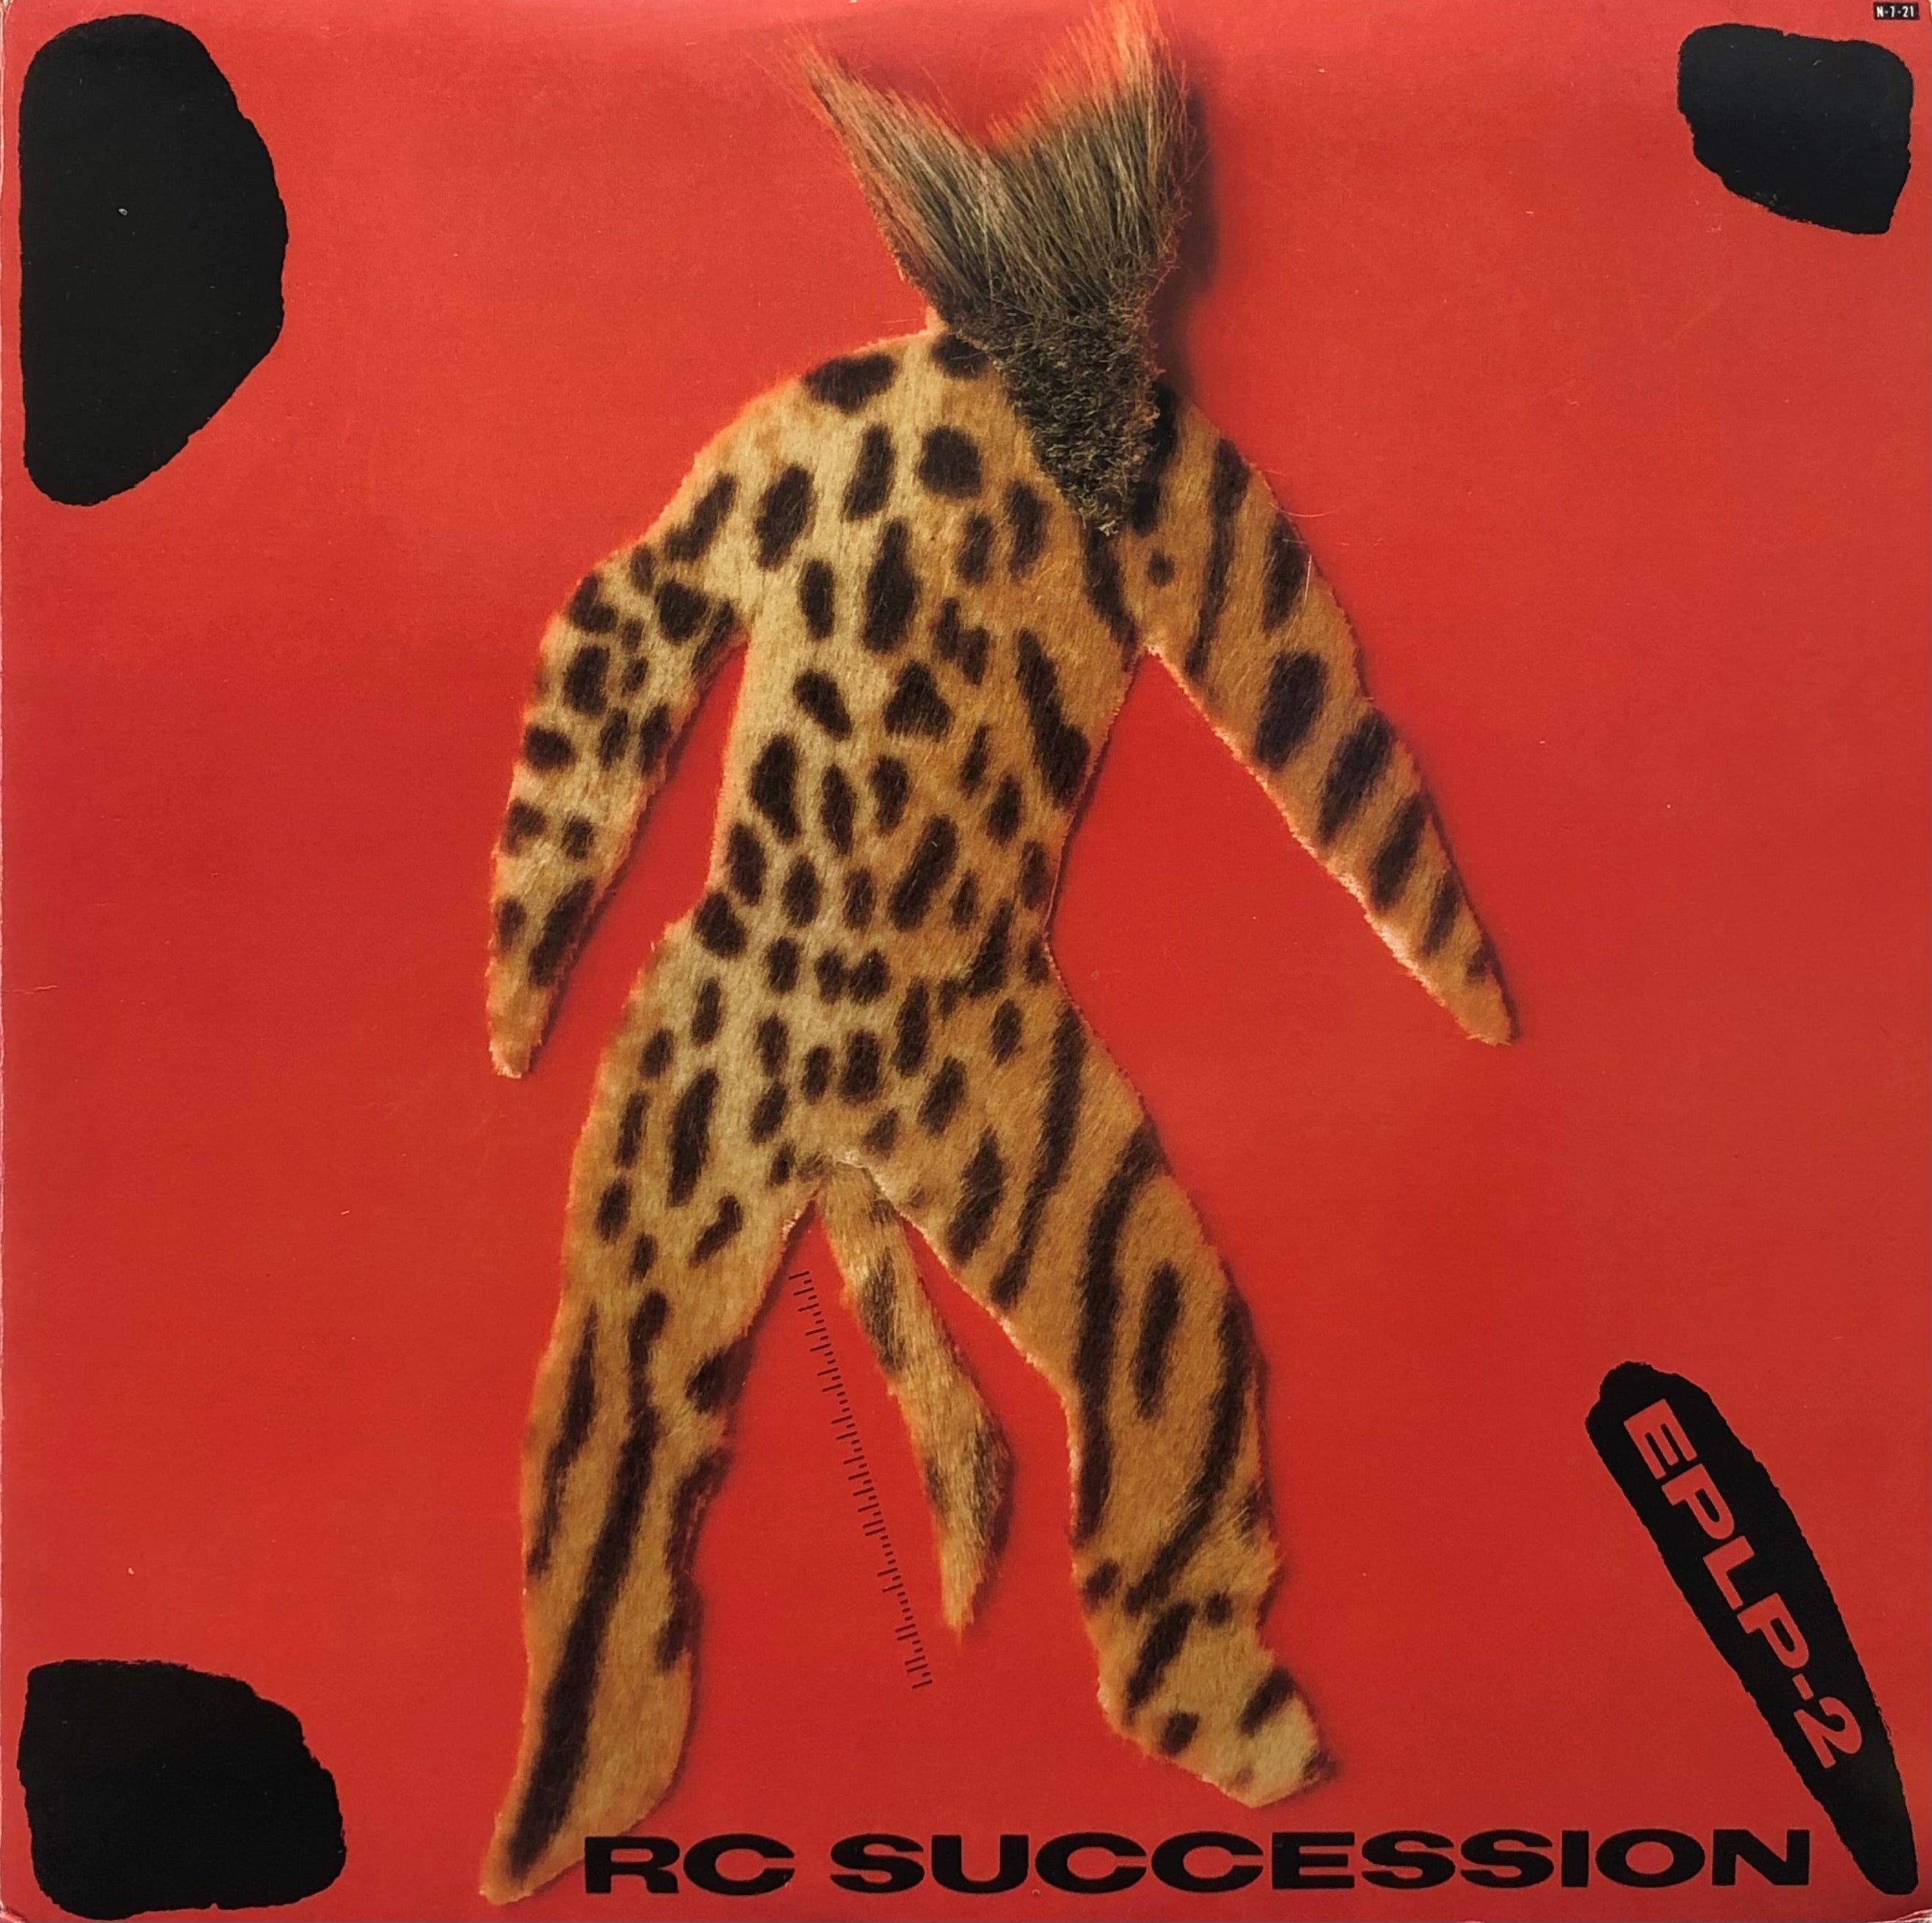 RC サクセション (RC SUCCESSION) / EPLP-2 (Speed Shock, S28S0002, LP)